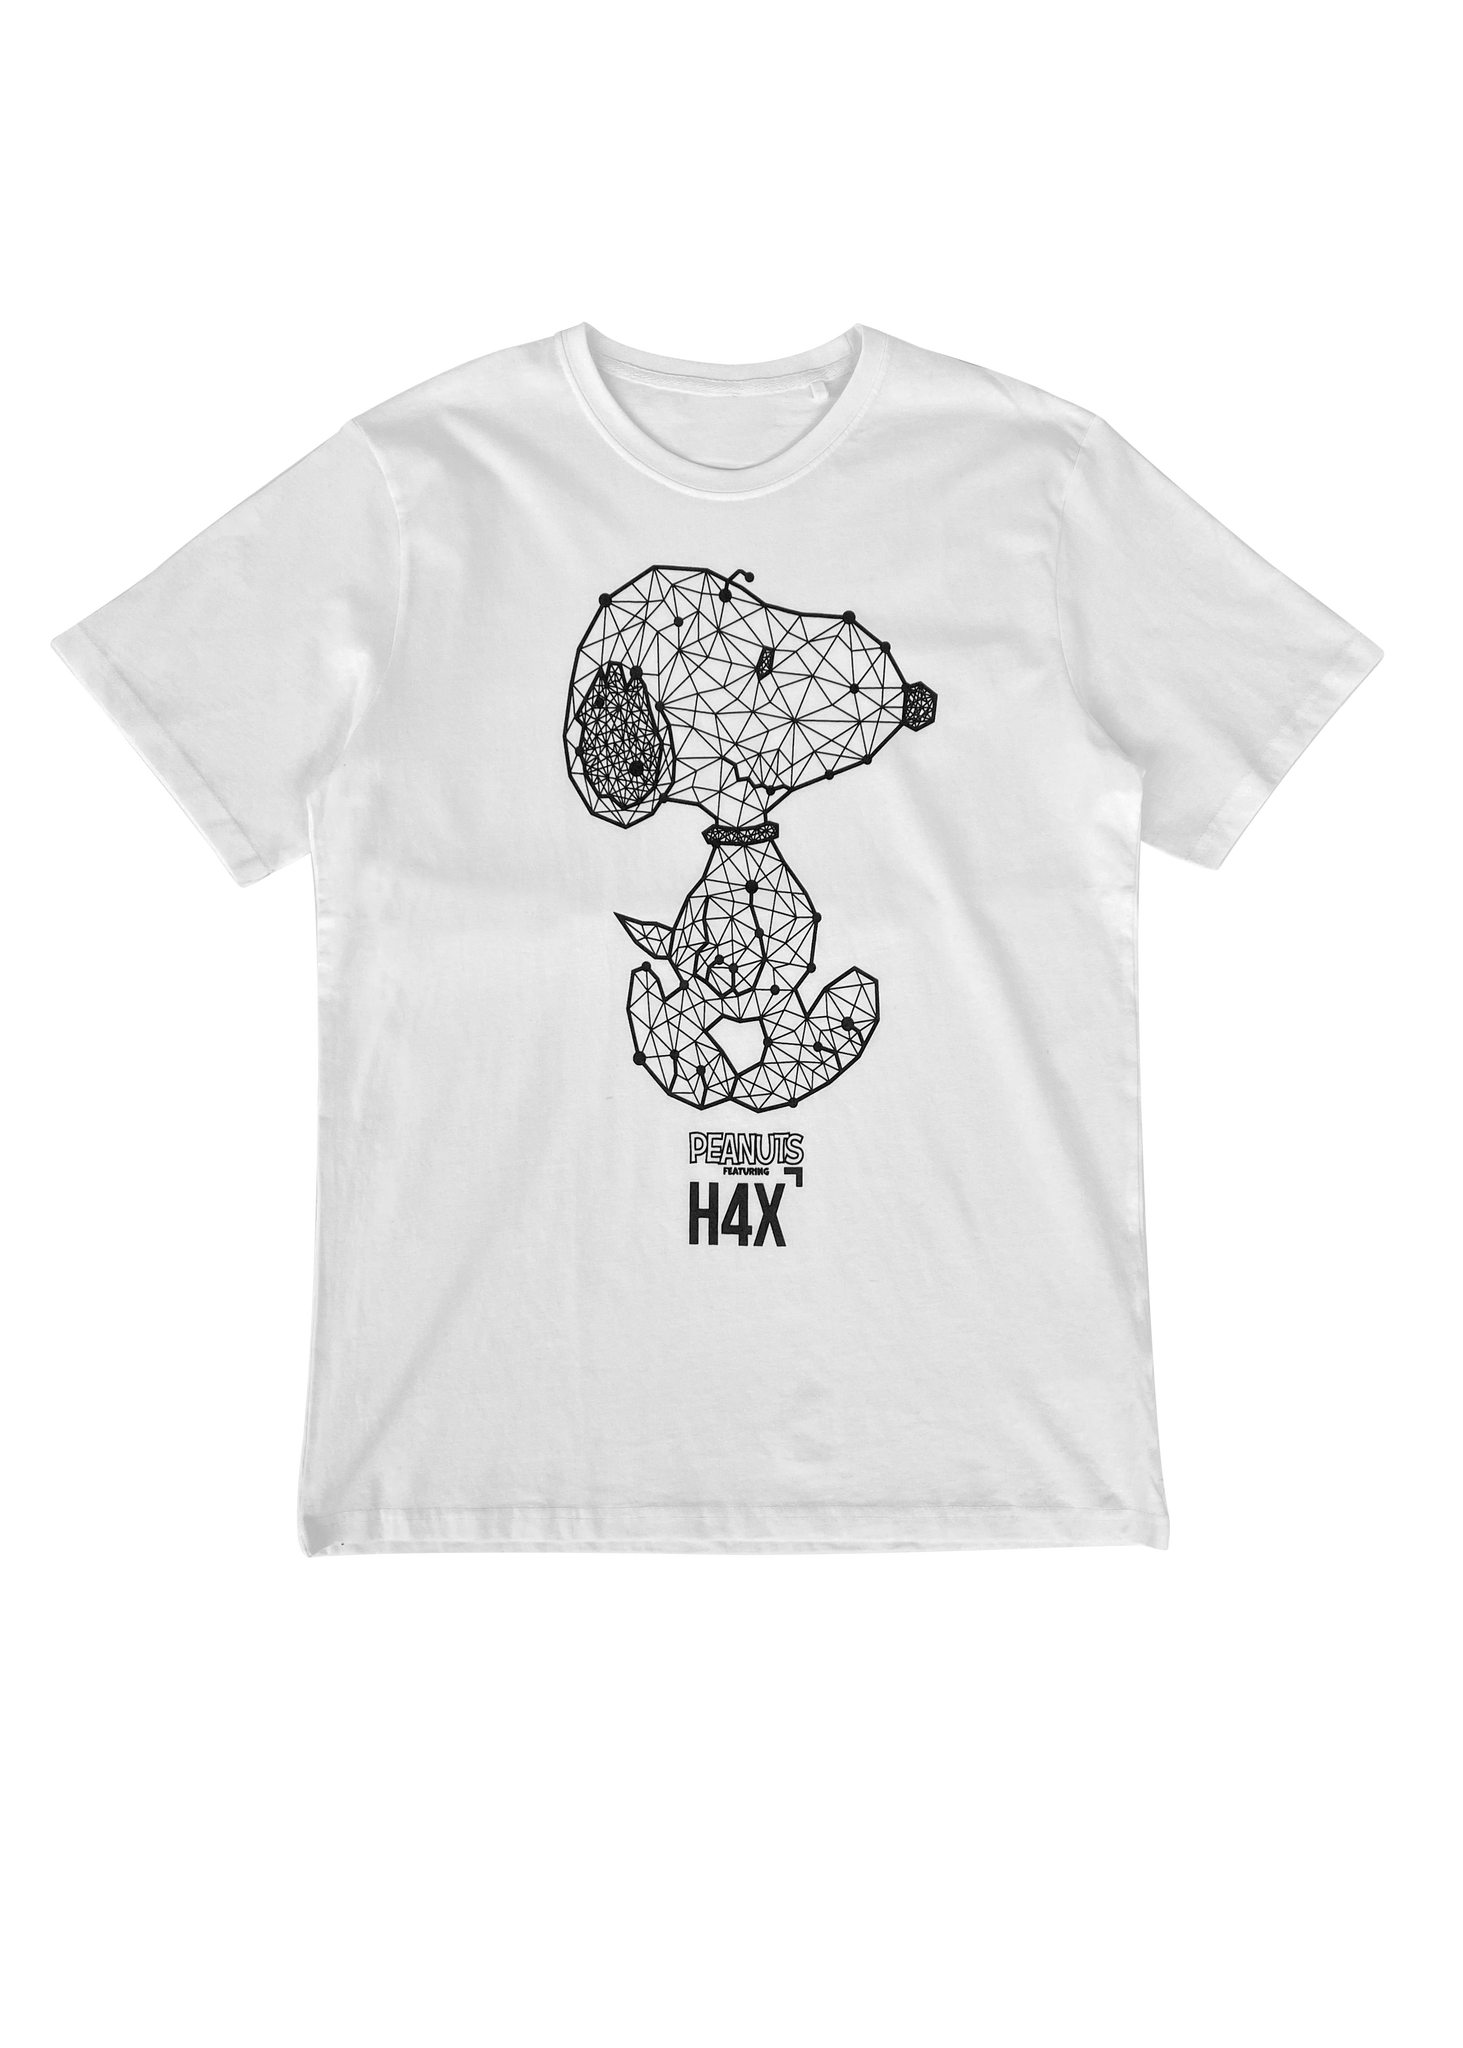 H4X Charlie Brown Peanuts Tee Shirt Mens size XL